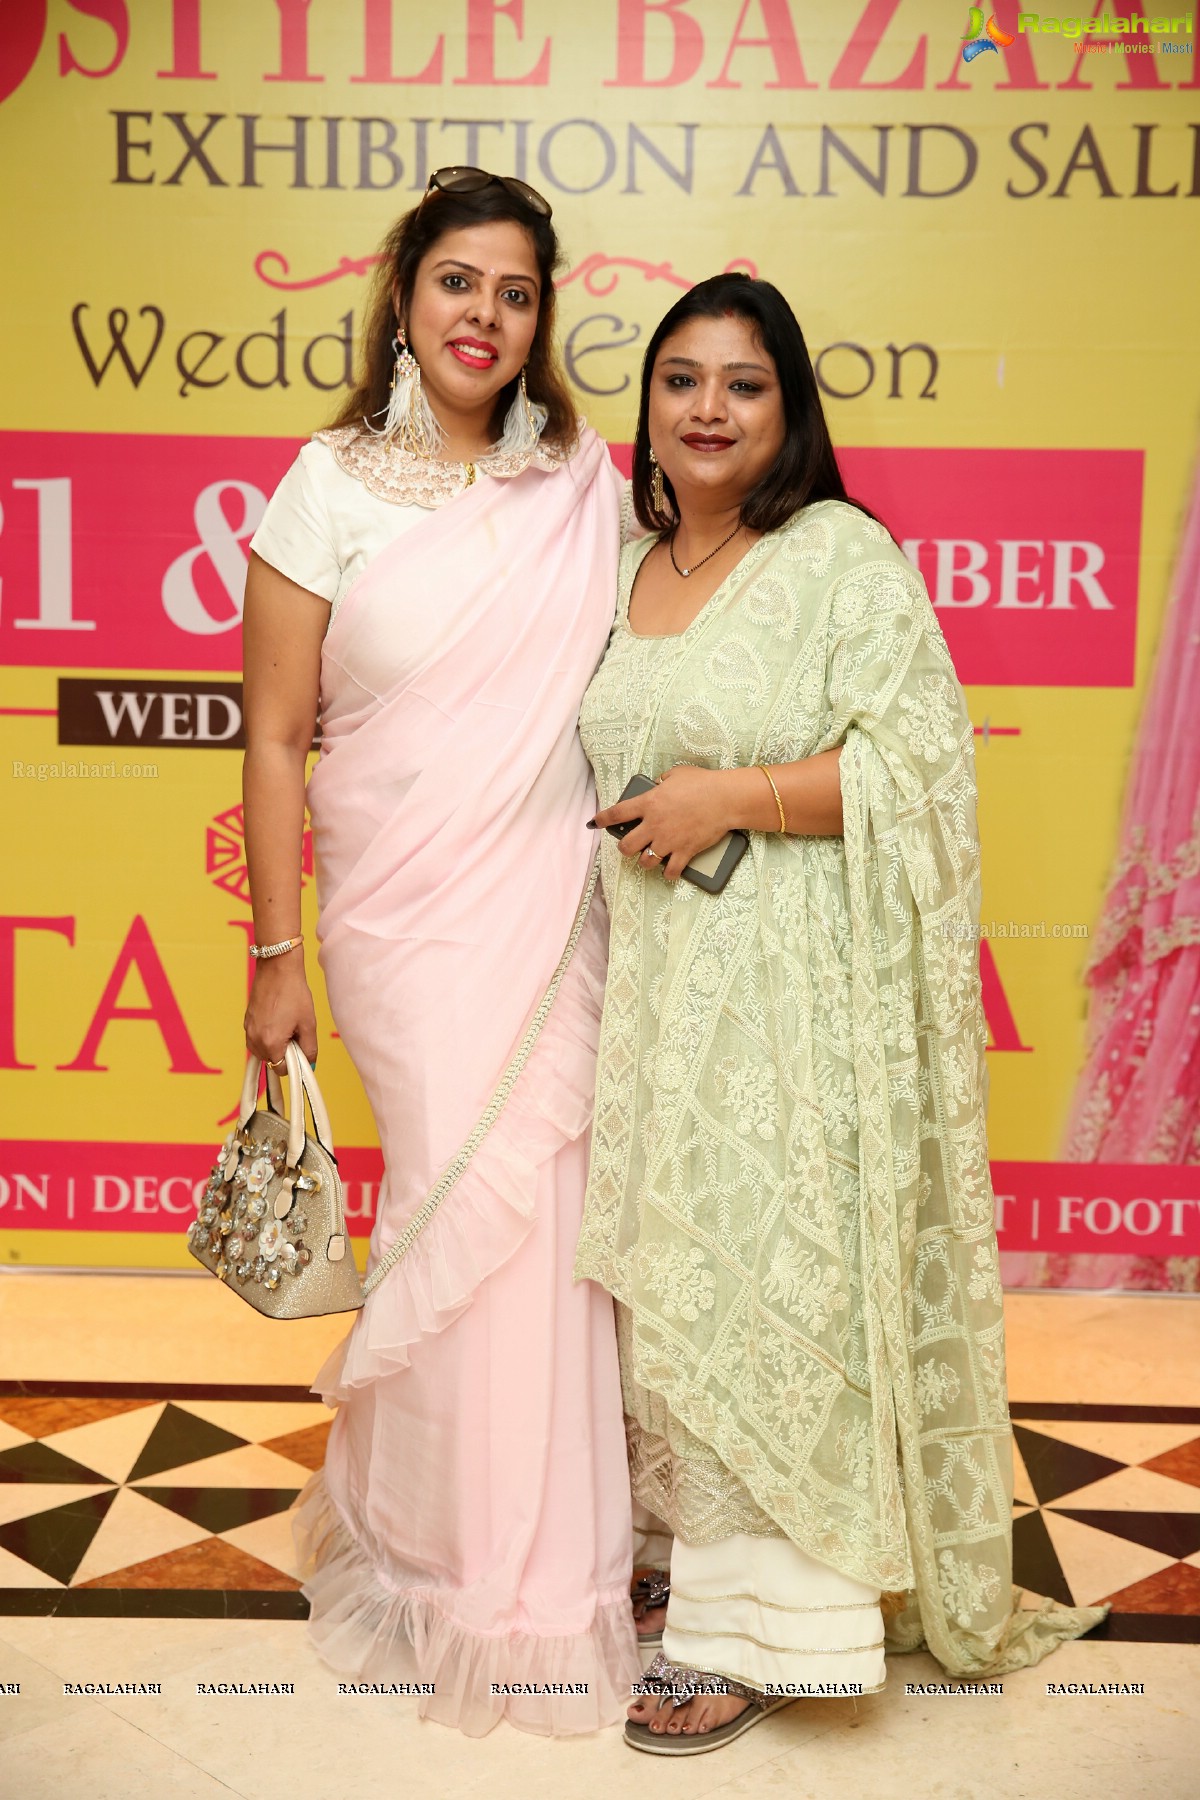 Archana Shastry Launches The Latest Fashion Exhibition of Style Bazaar @ Taj Krishna